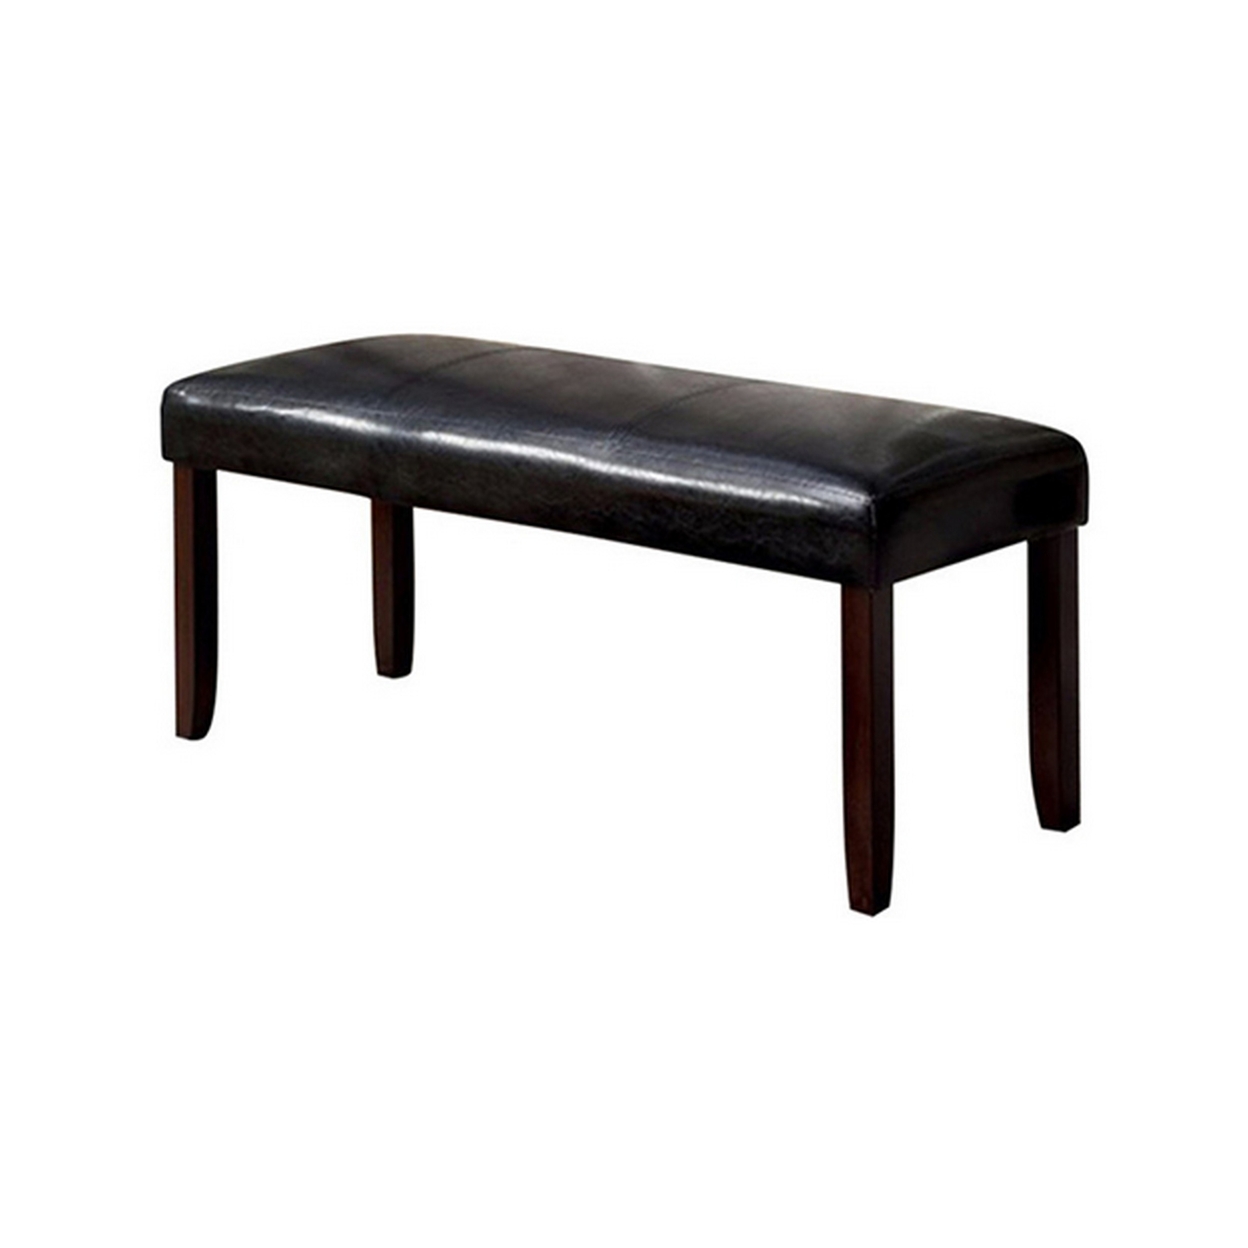 Oliver 46 Inch Bench, Leather Upholstery, Wood Frame, Soft Cushion, Black -Saltoro Sherpi